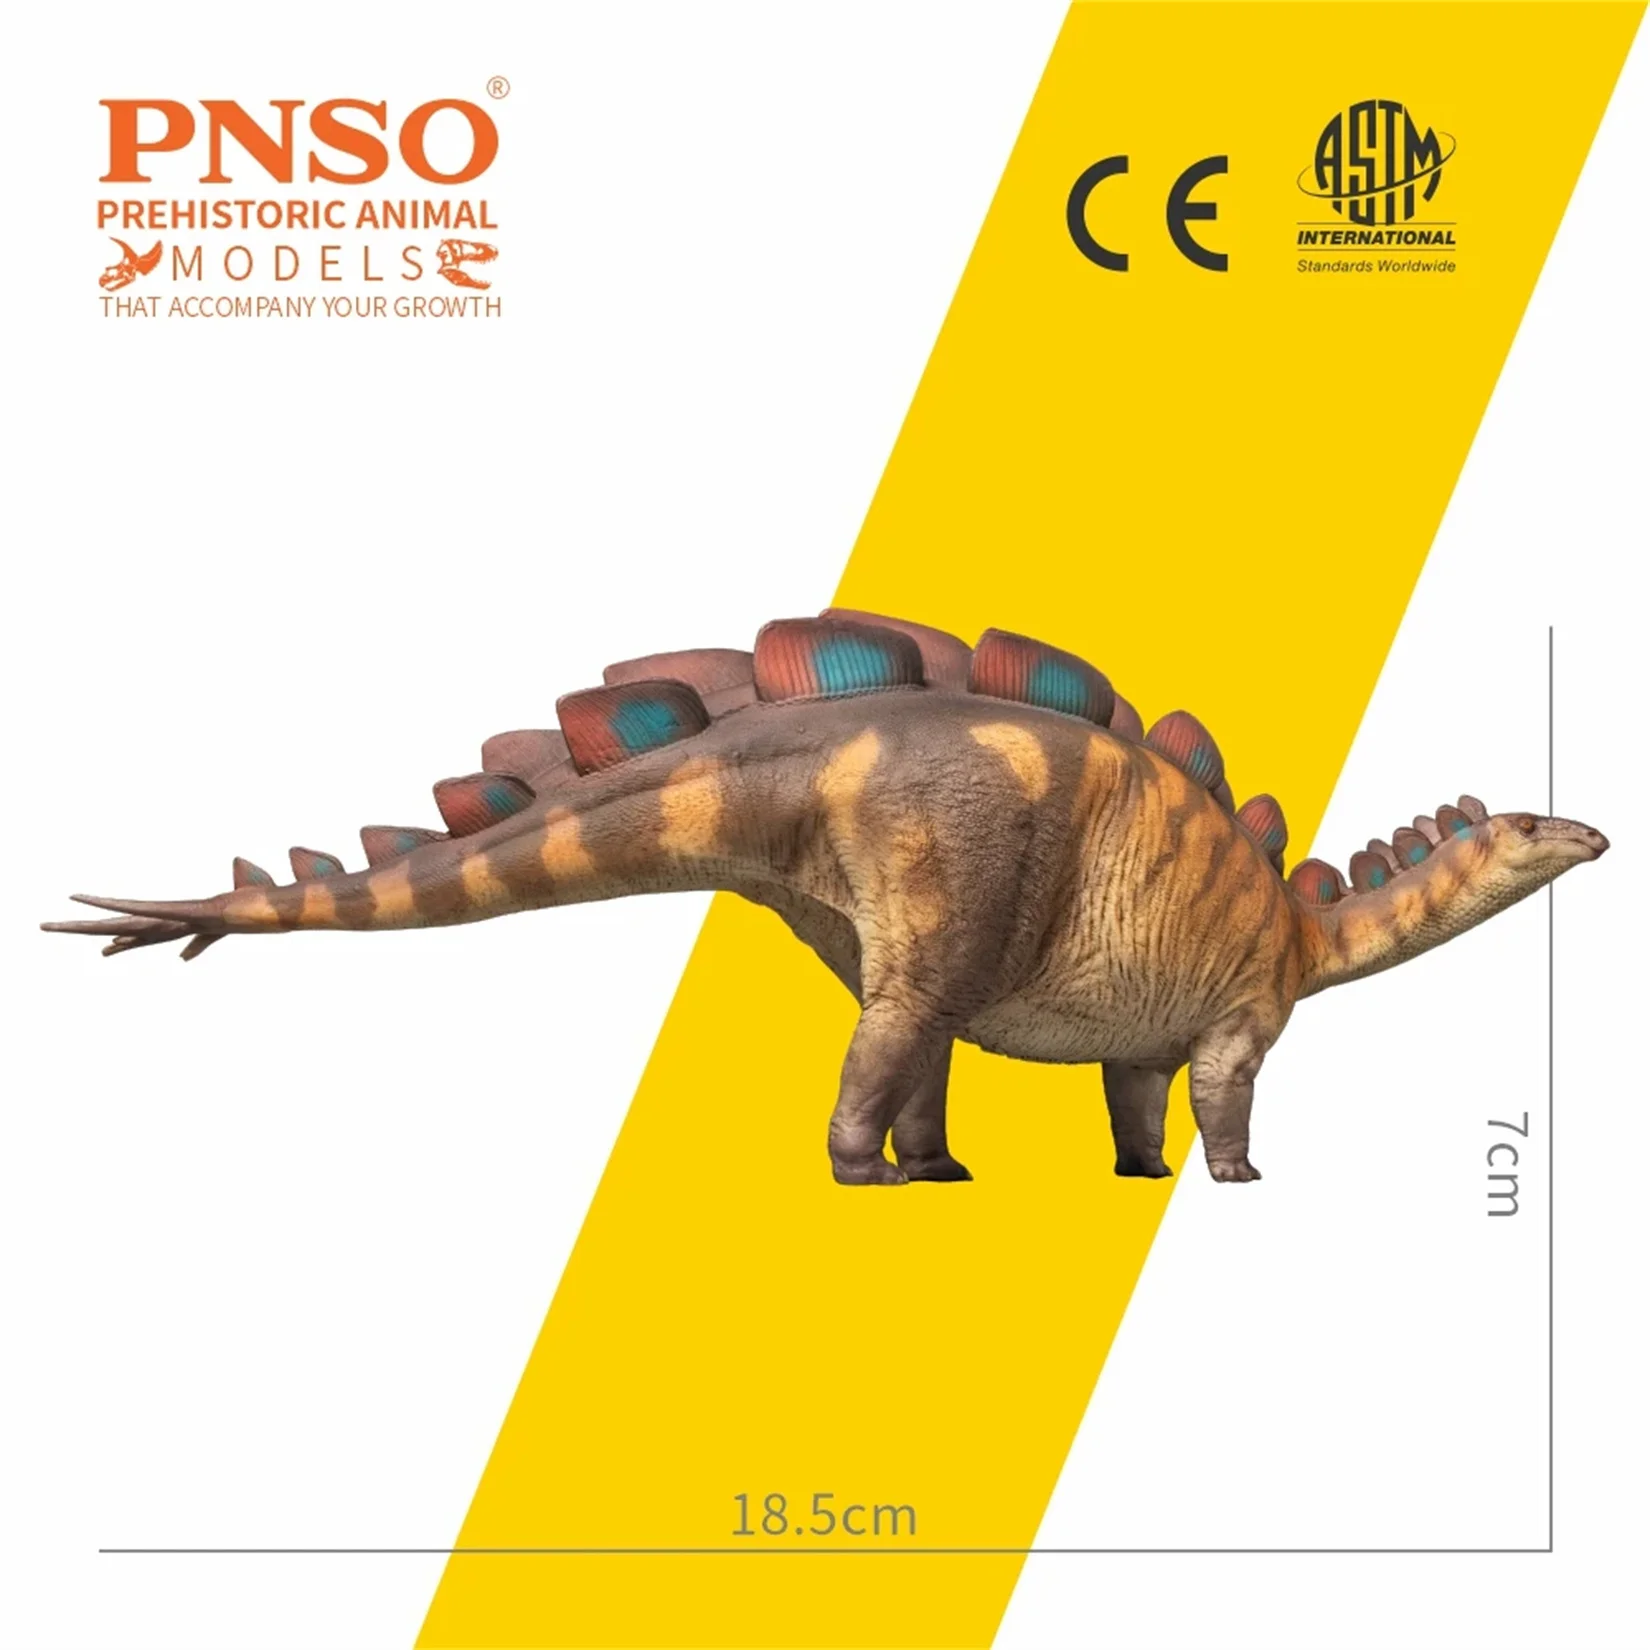 PNSO 82 Wuerhosaurus Xilin Model Stegosauridae Dinosaur Prehistoric Animal Scene Decoration Gift Collection Scientific Statue